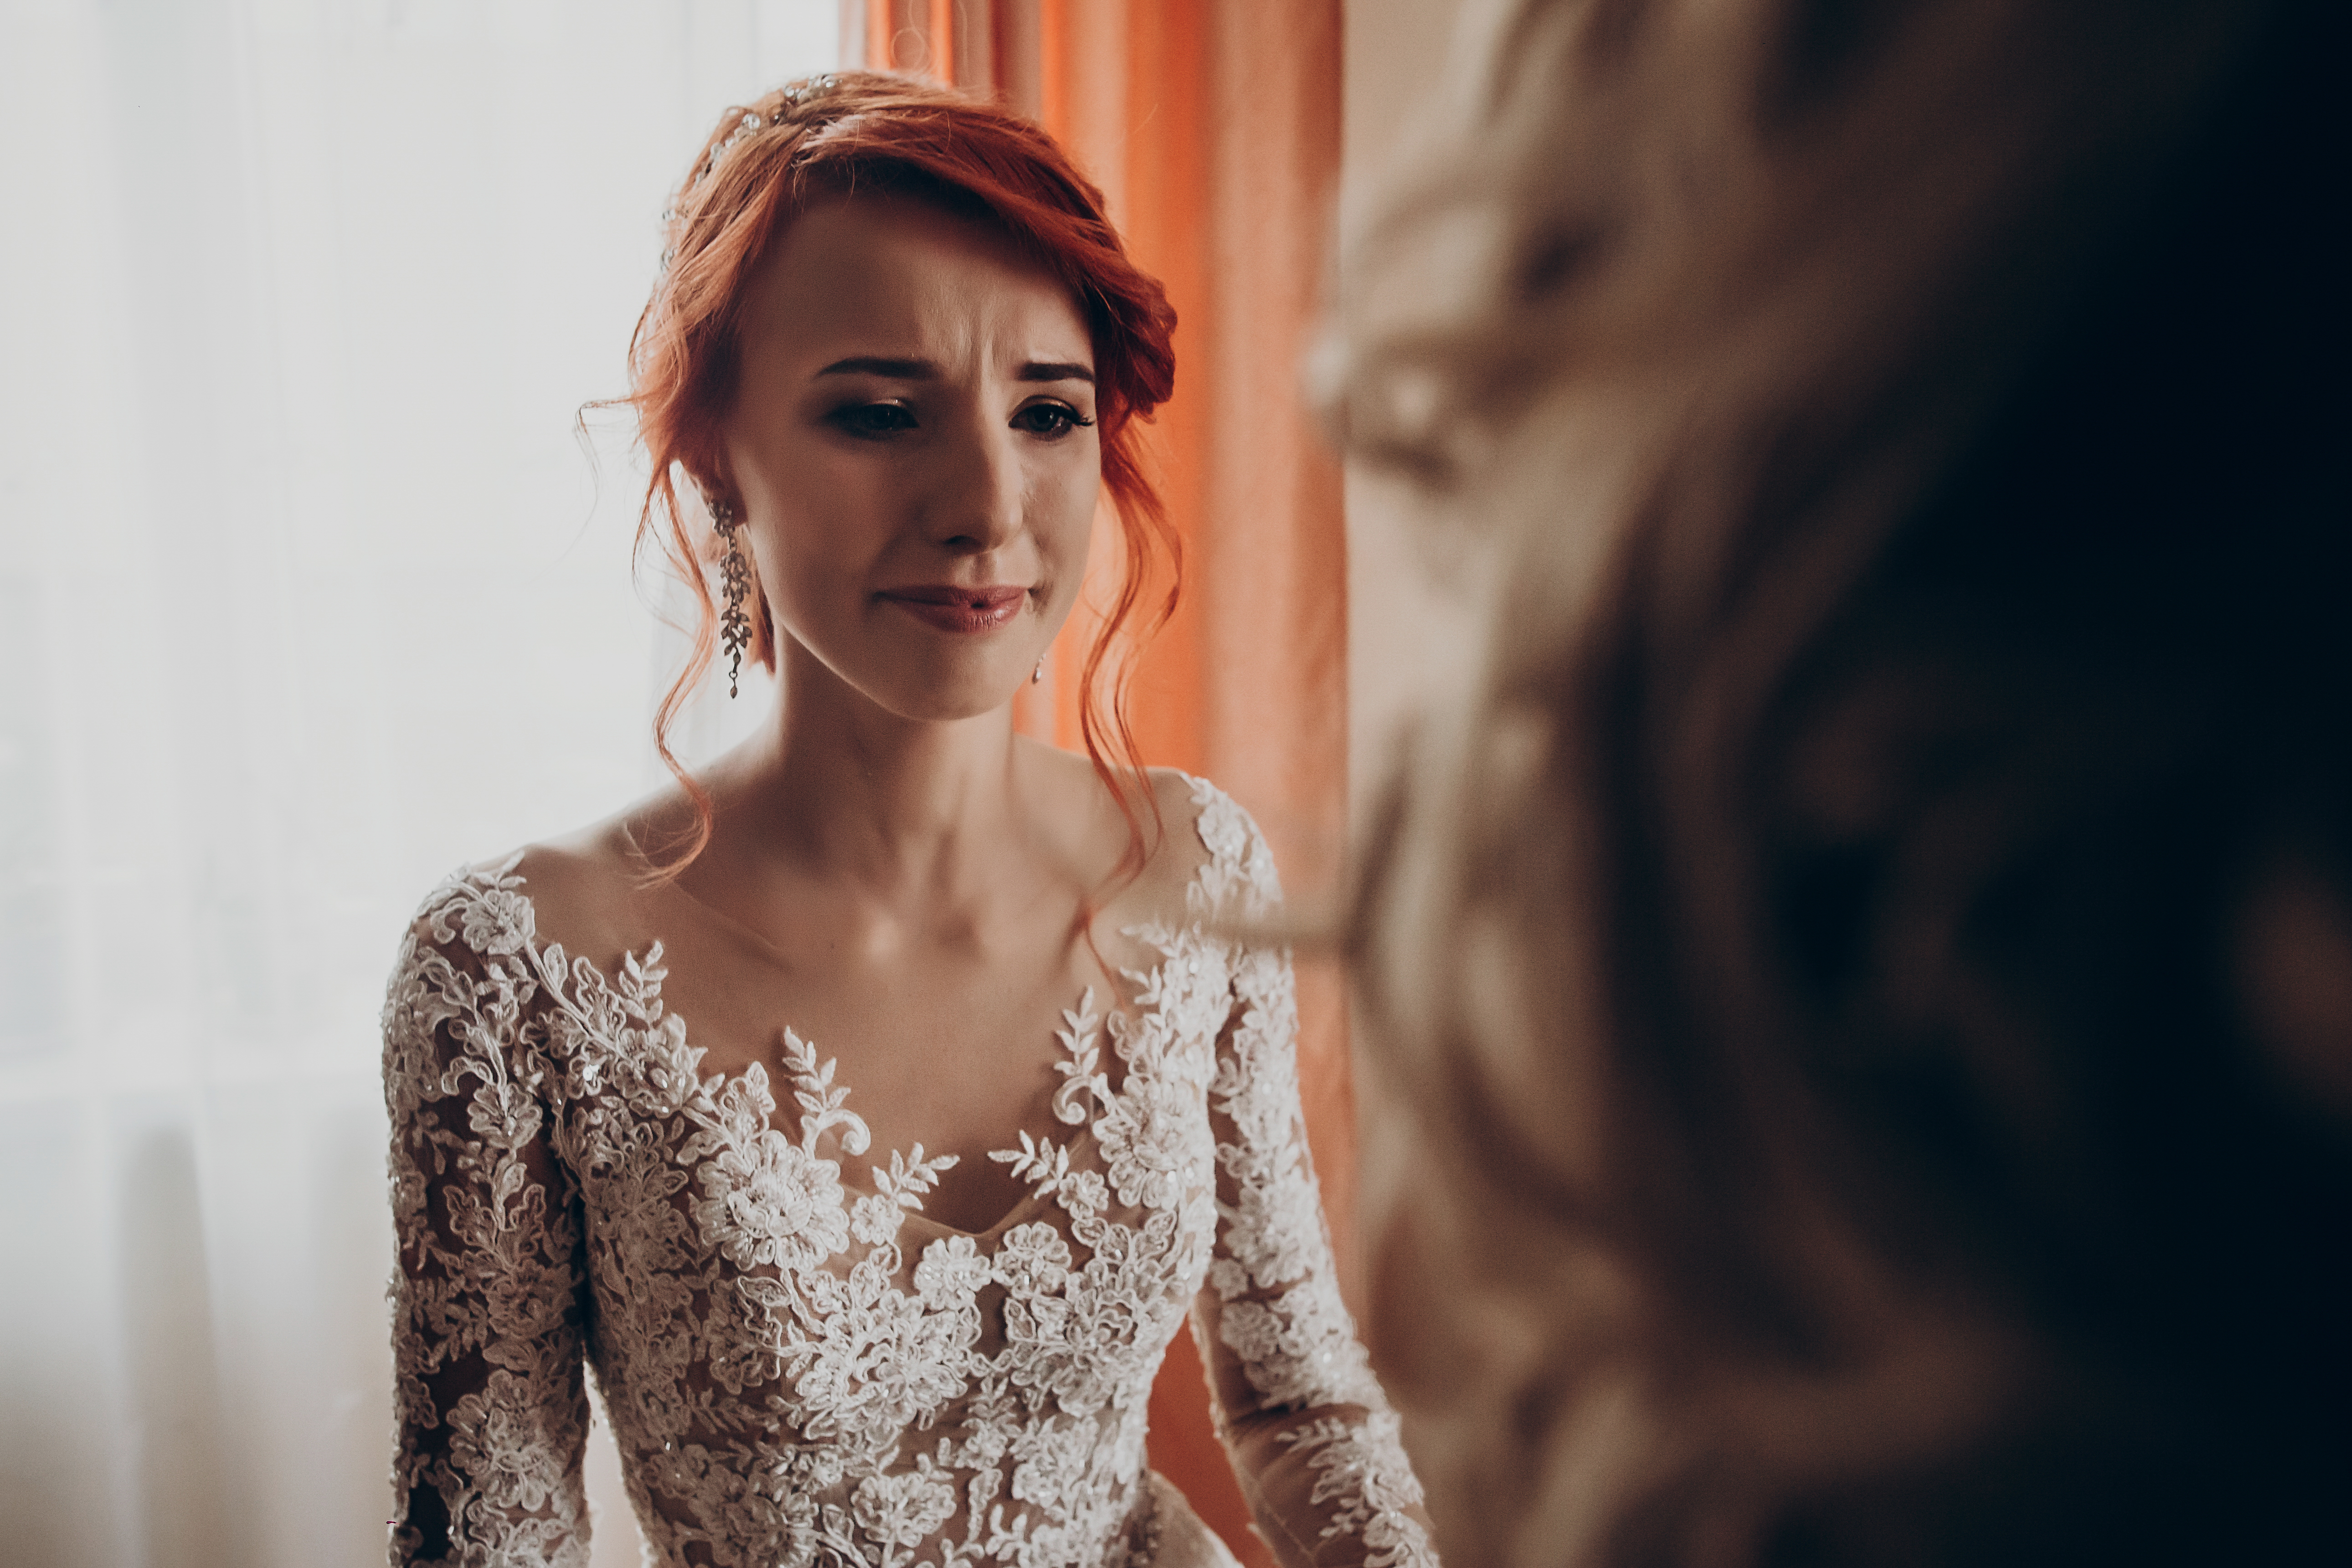 Une mariée pleure en regardant sa famille | Source : Shutterstock